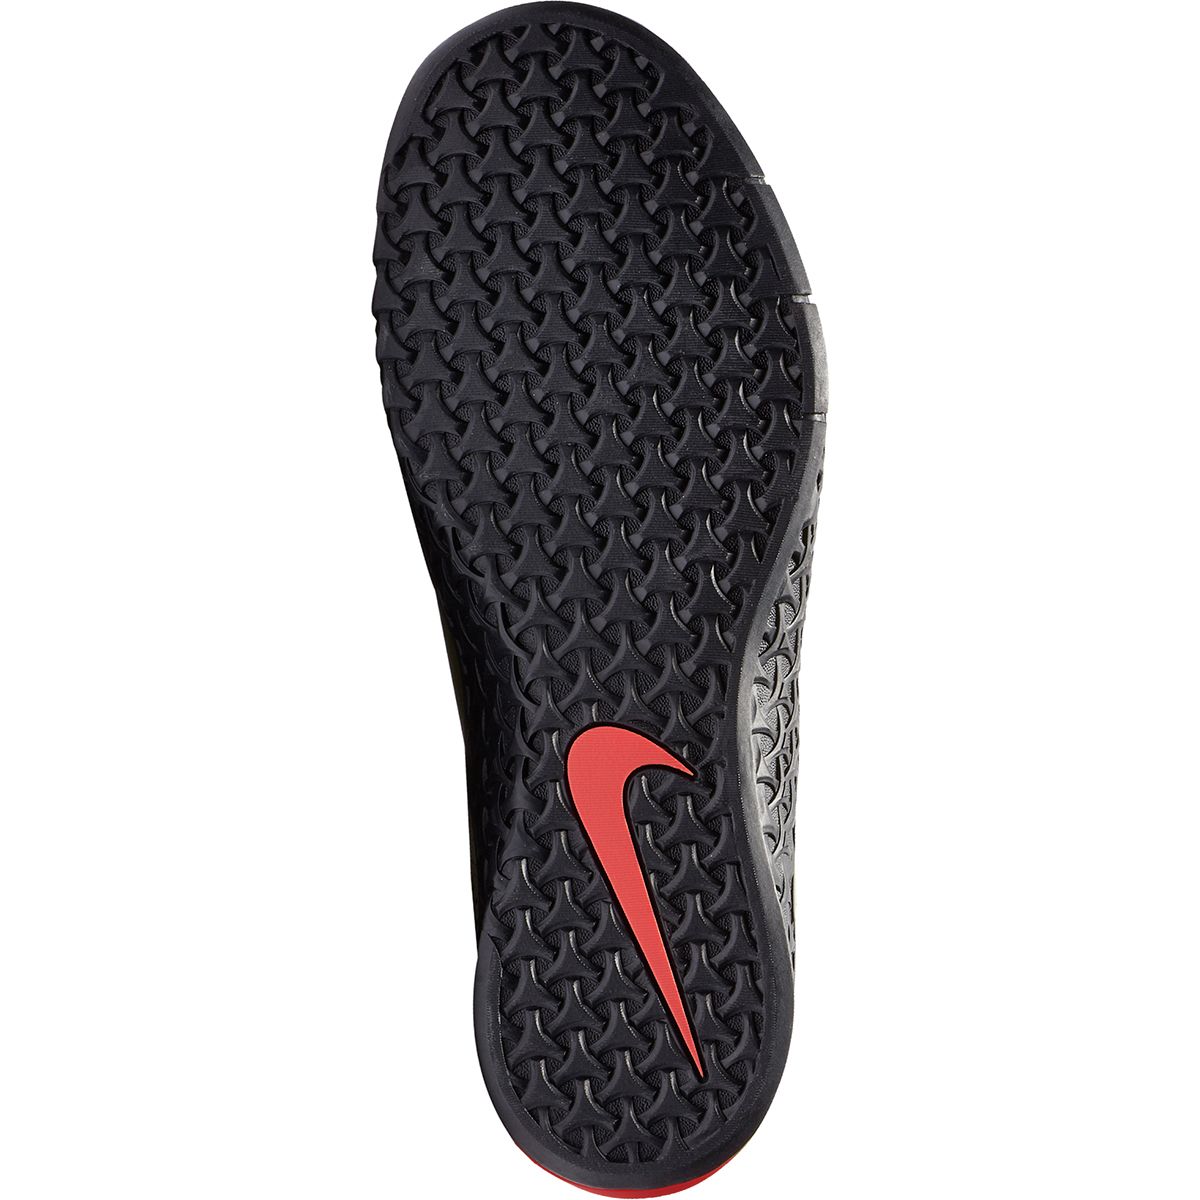 Nike Metcon Training Shoe - Men's -